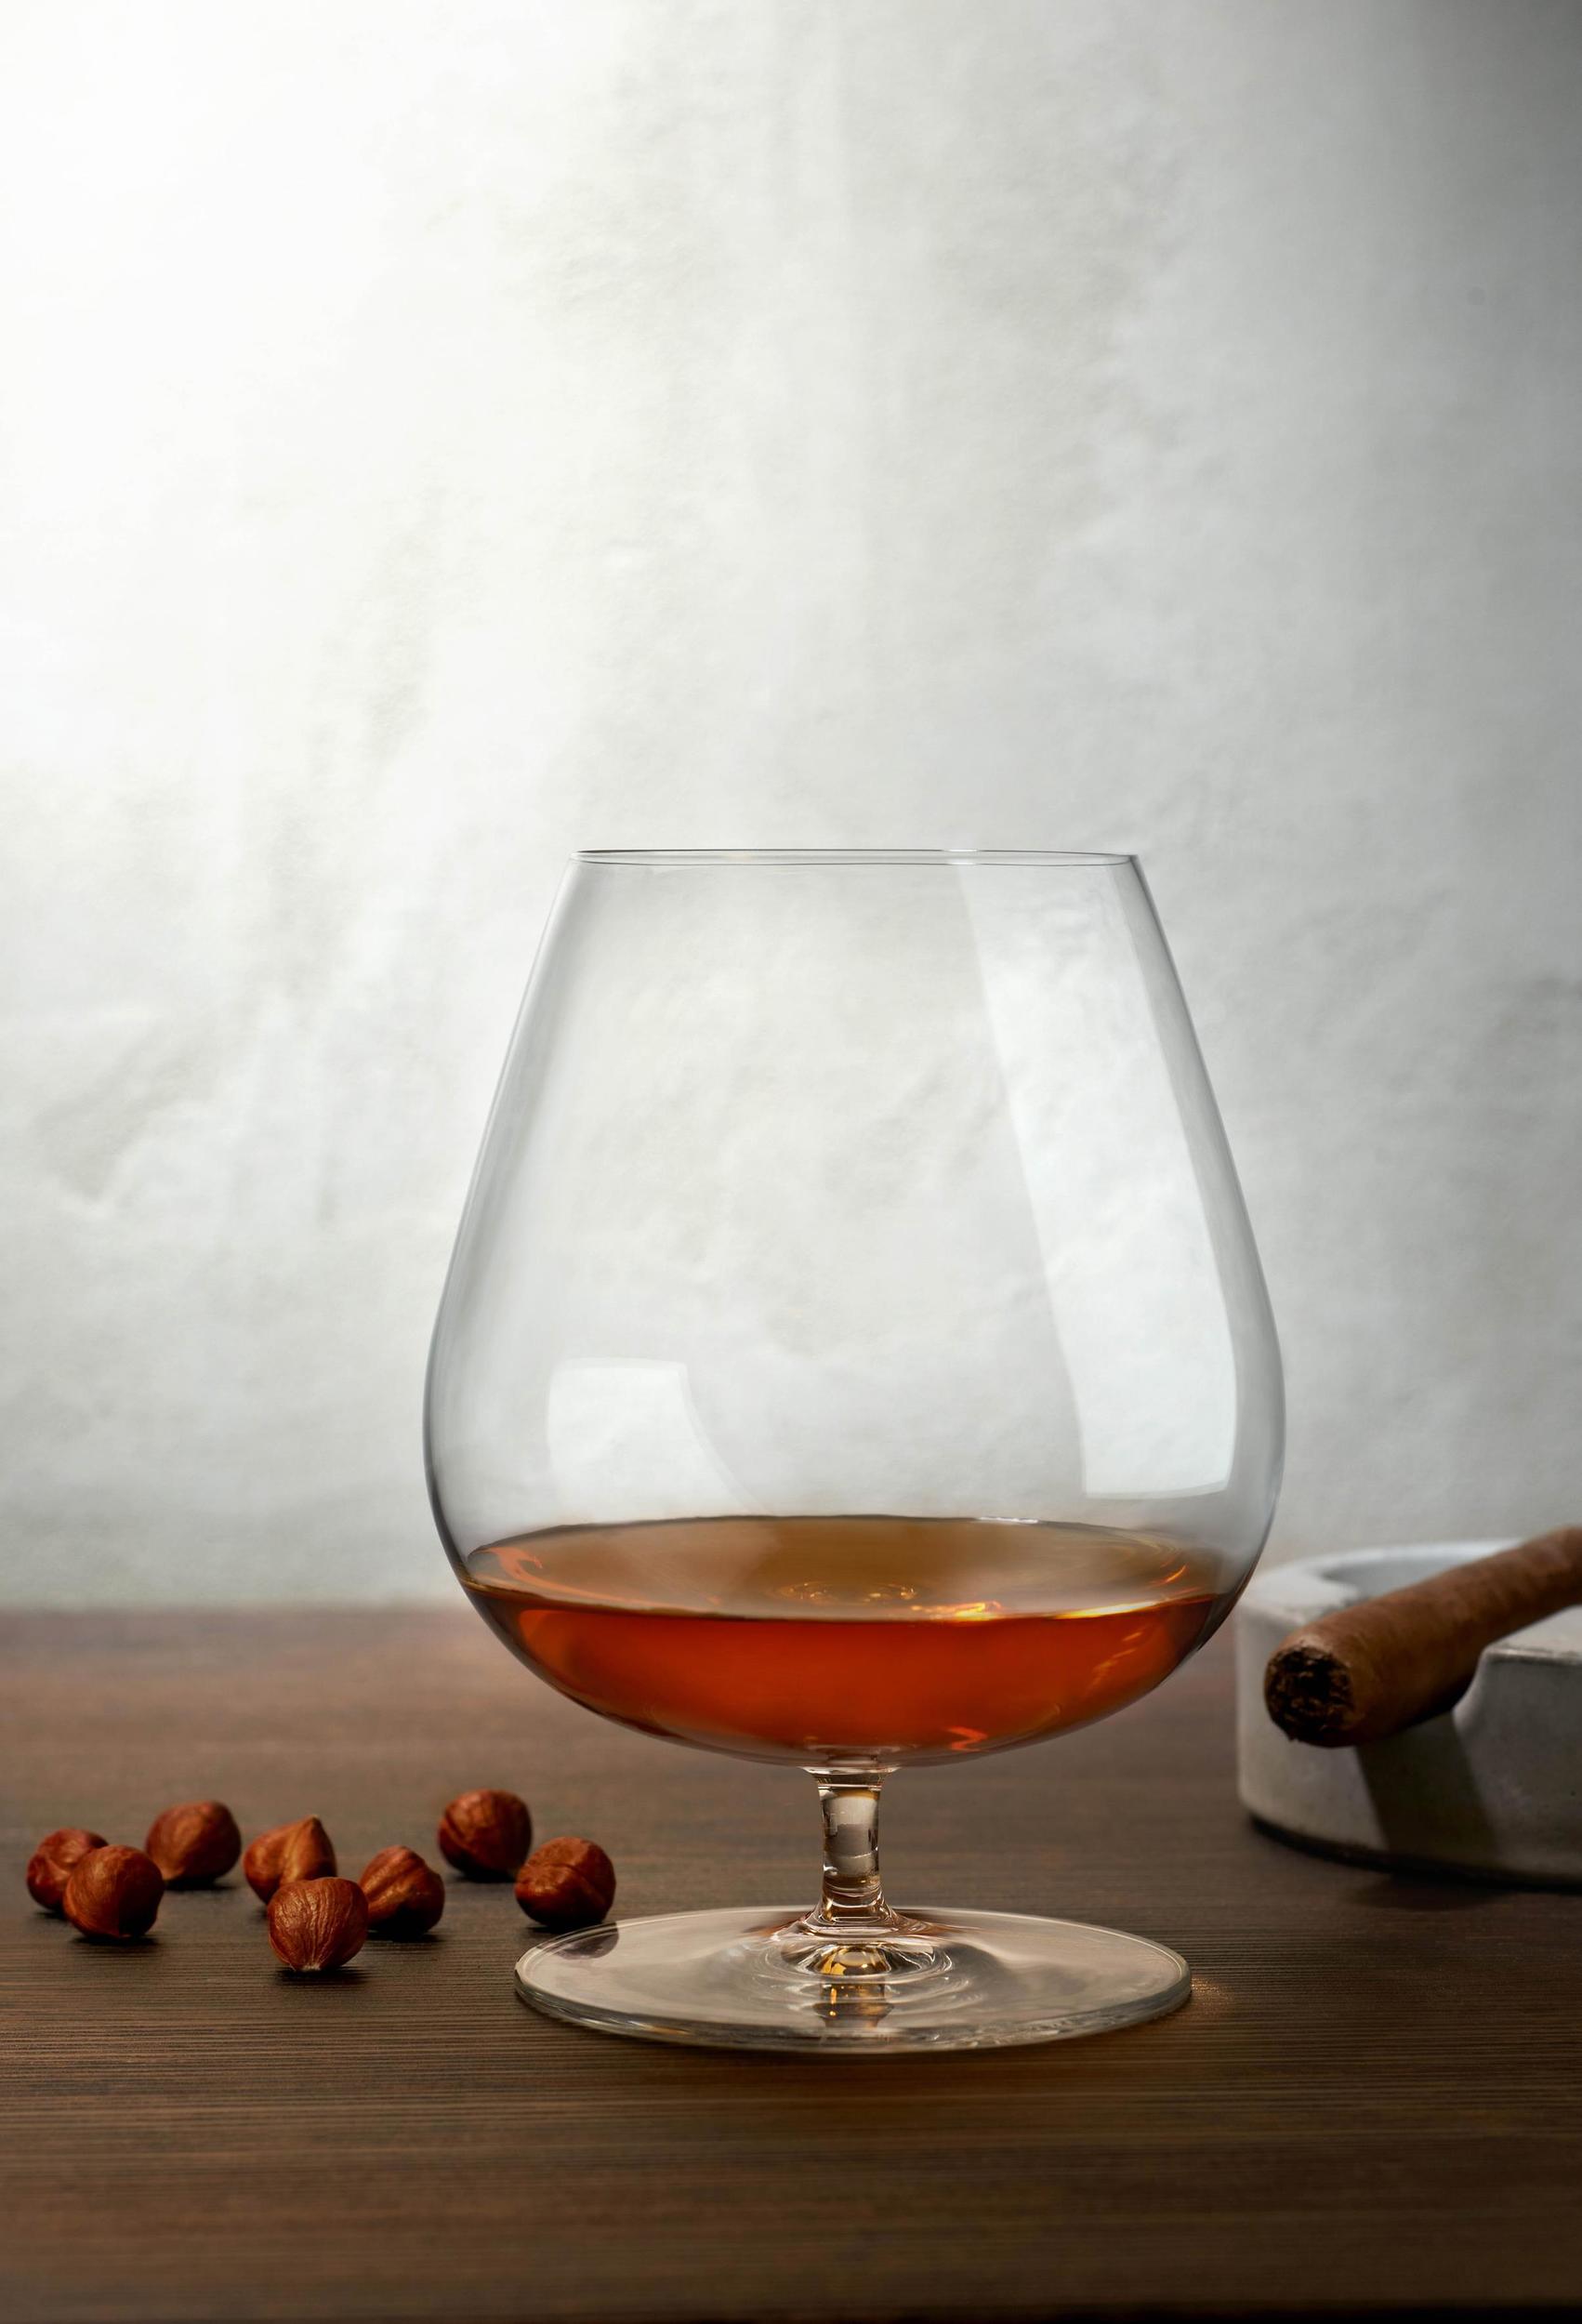 Nude Glass Vintage Cognac Glasses, Set of 4, Lead-Free Crystal on